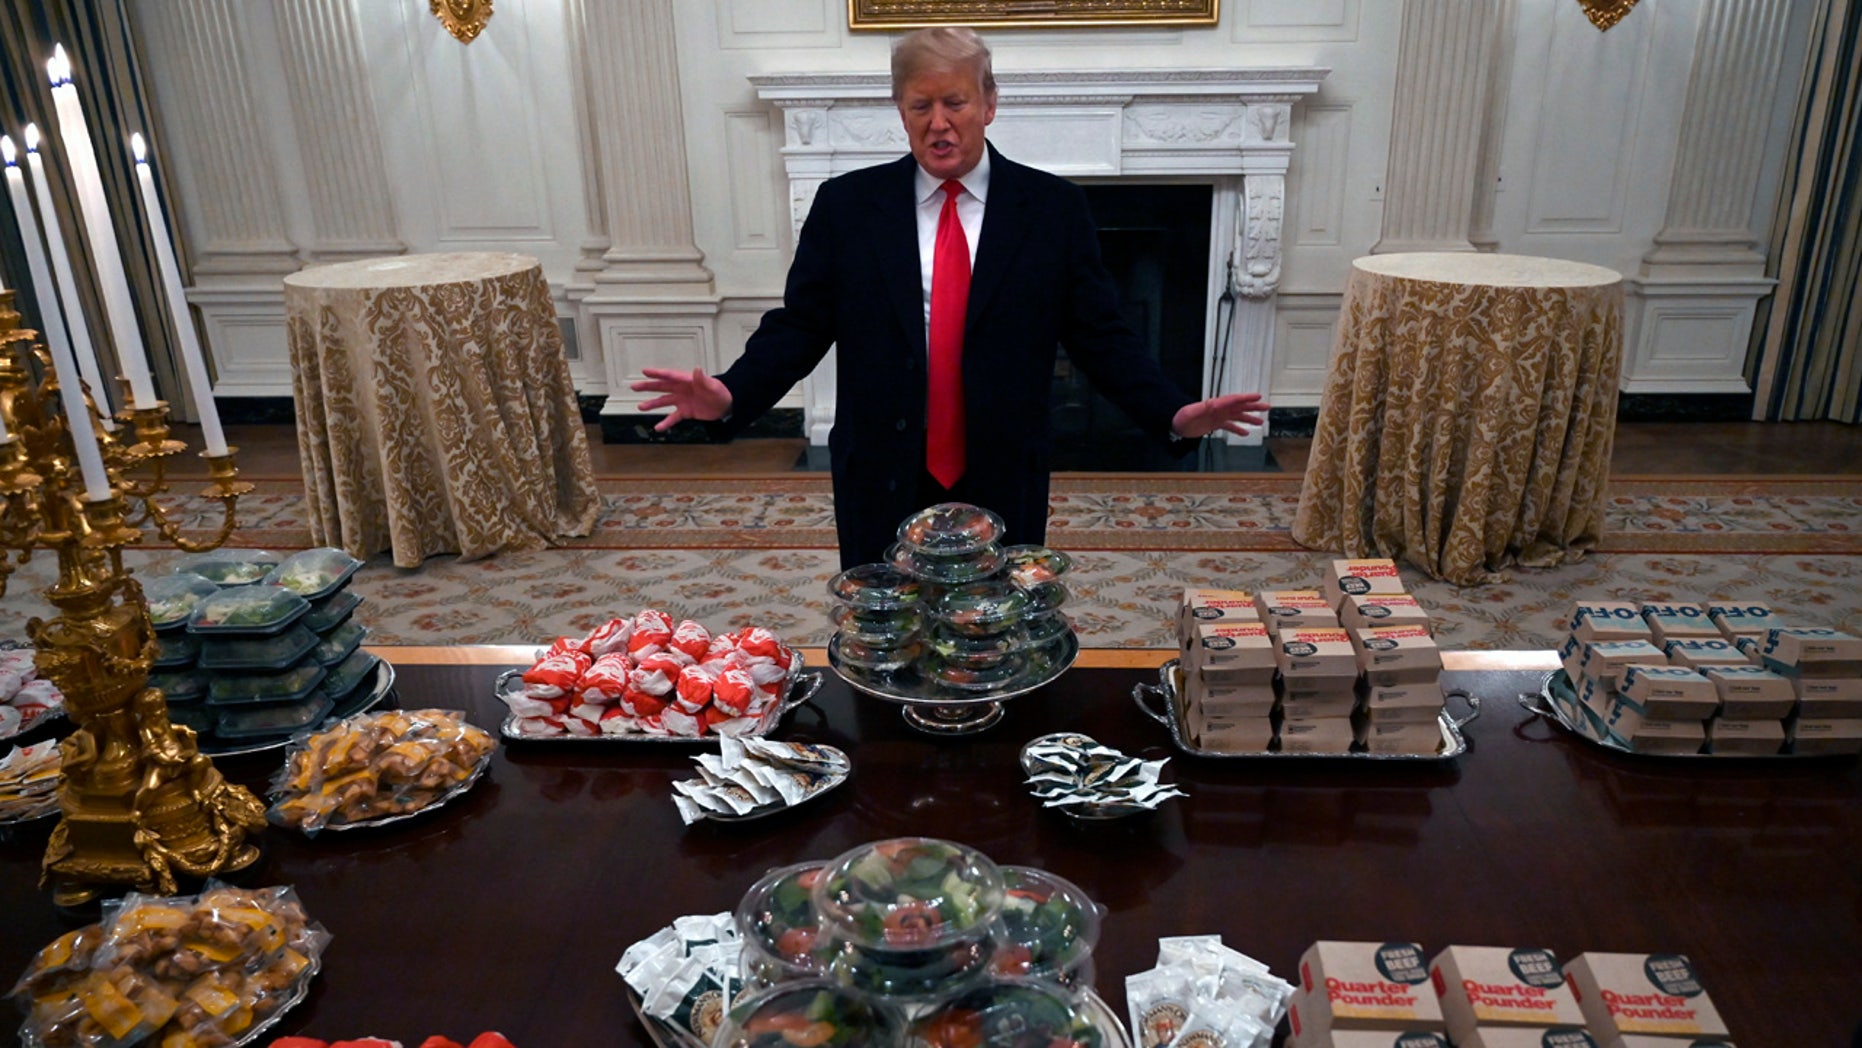 Trump buys McDonalds food for visiting football team.